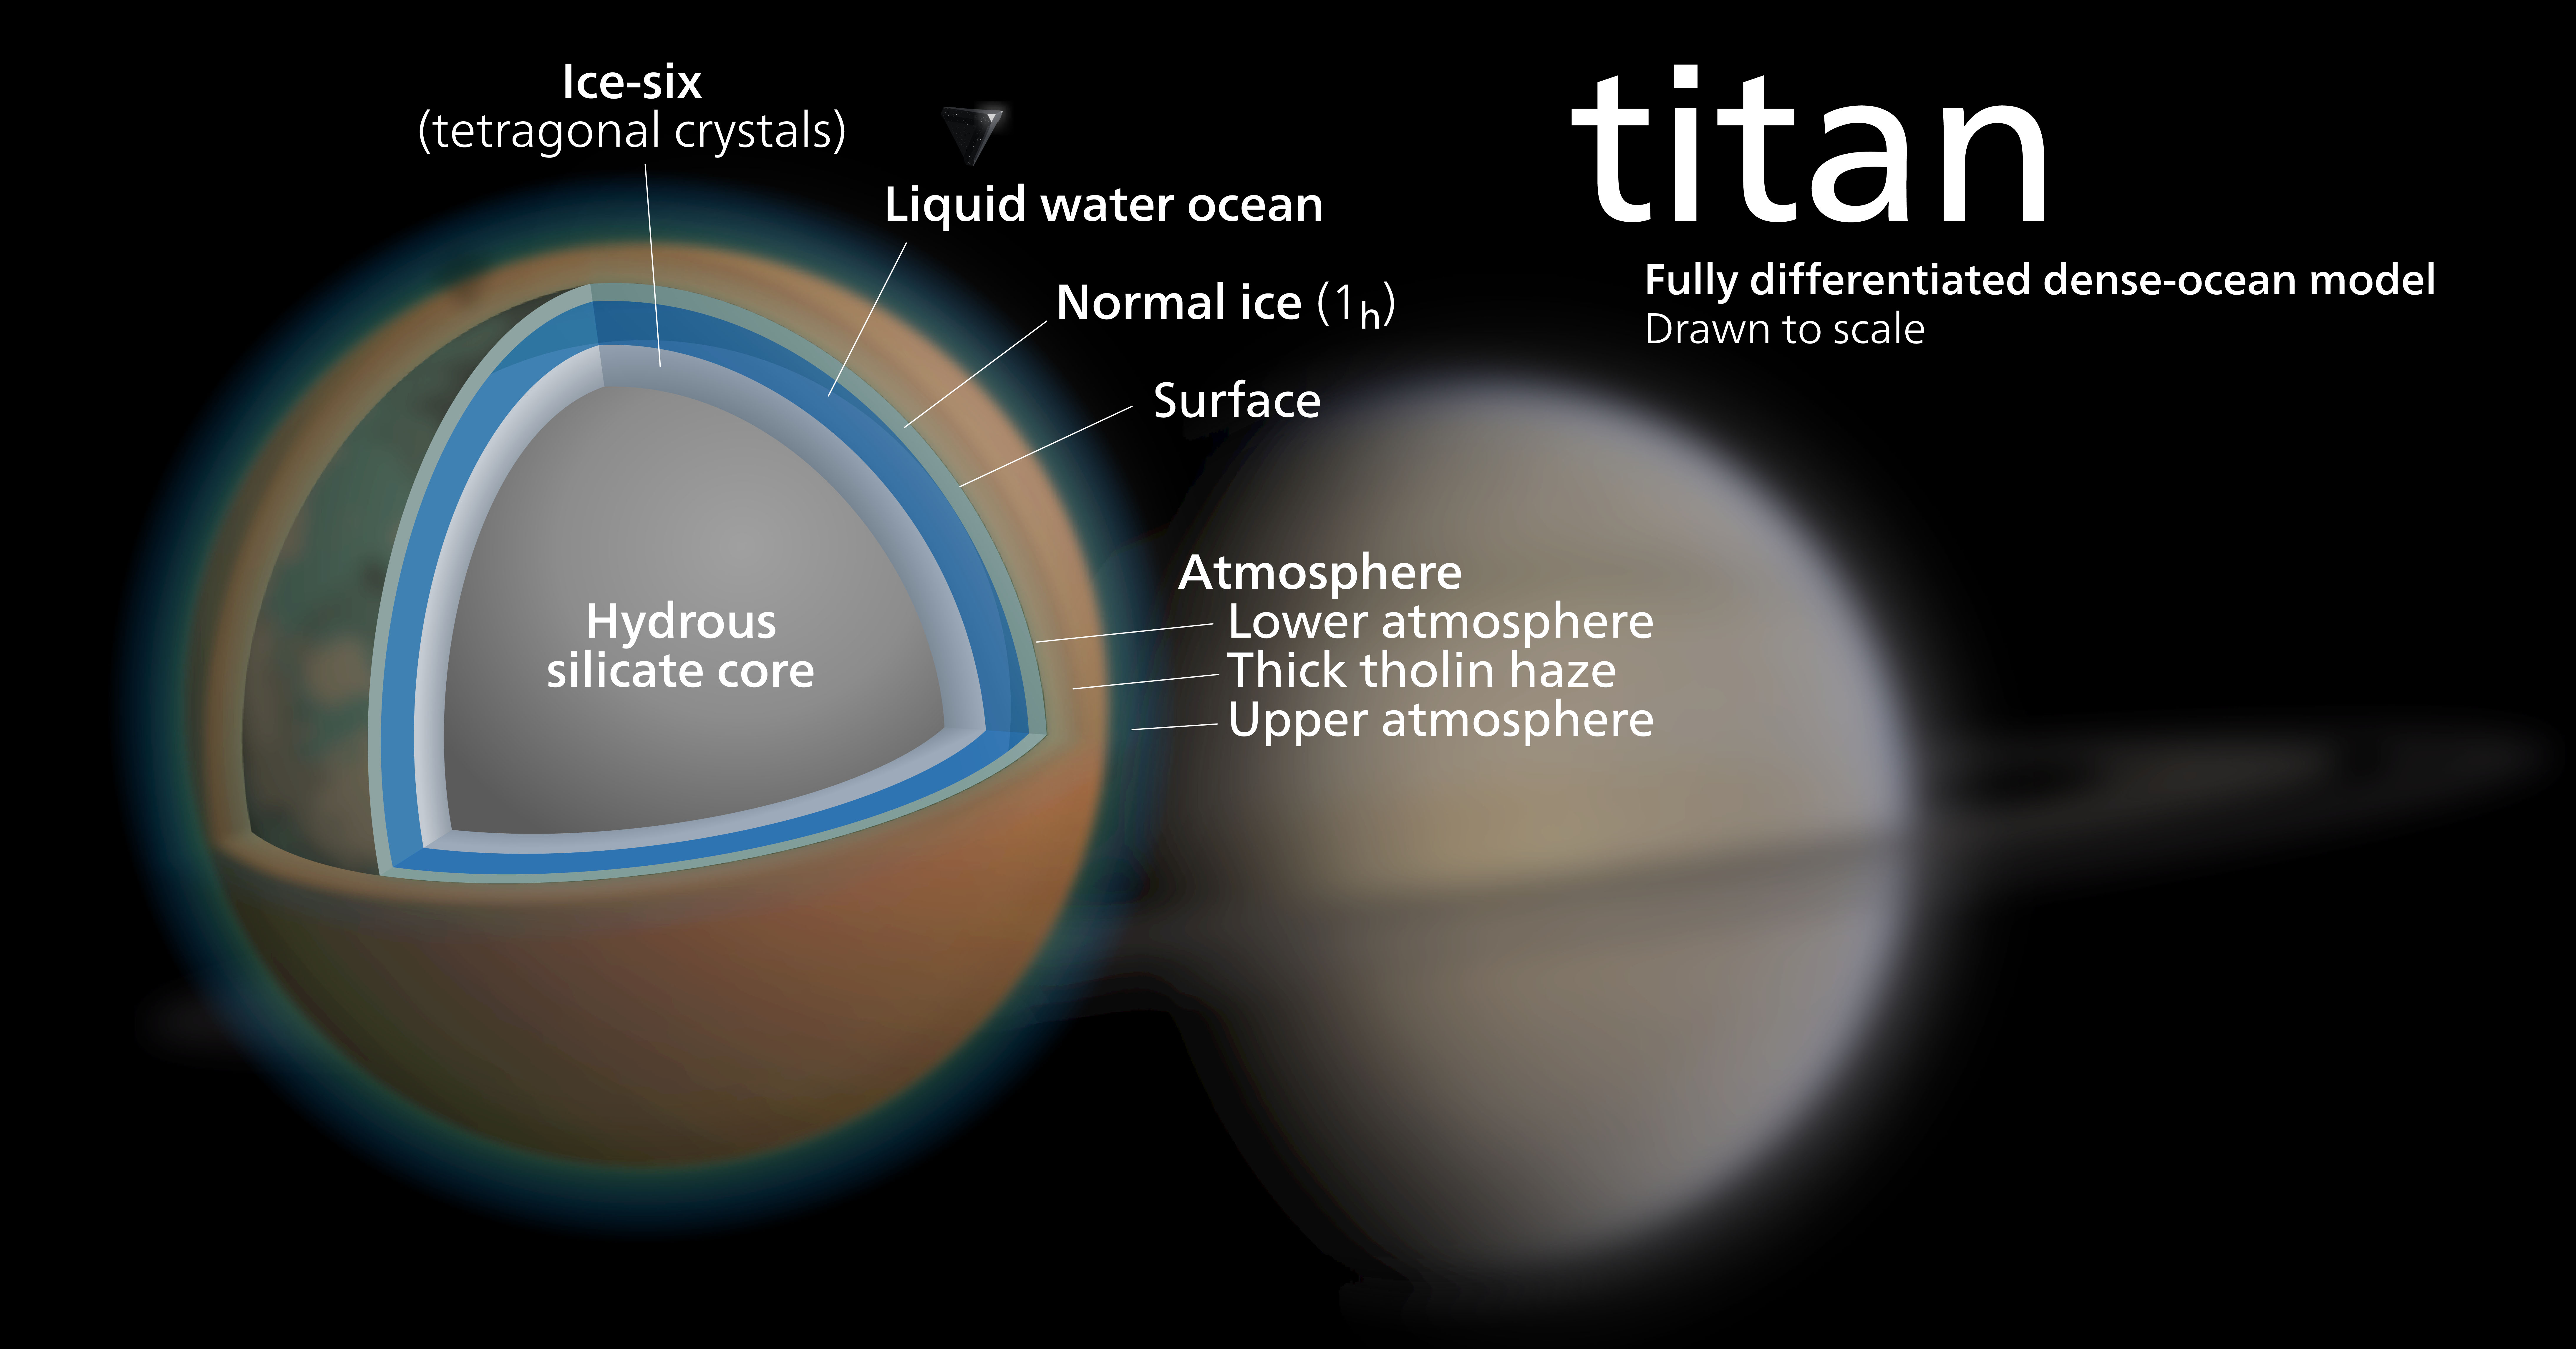 https://commons.wikimedia.org/wiki/File:Titan_poster.svg